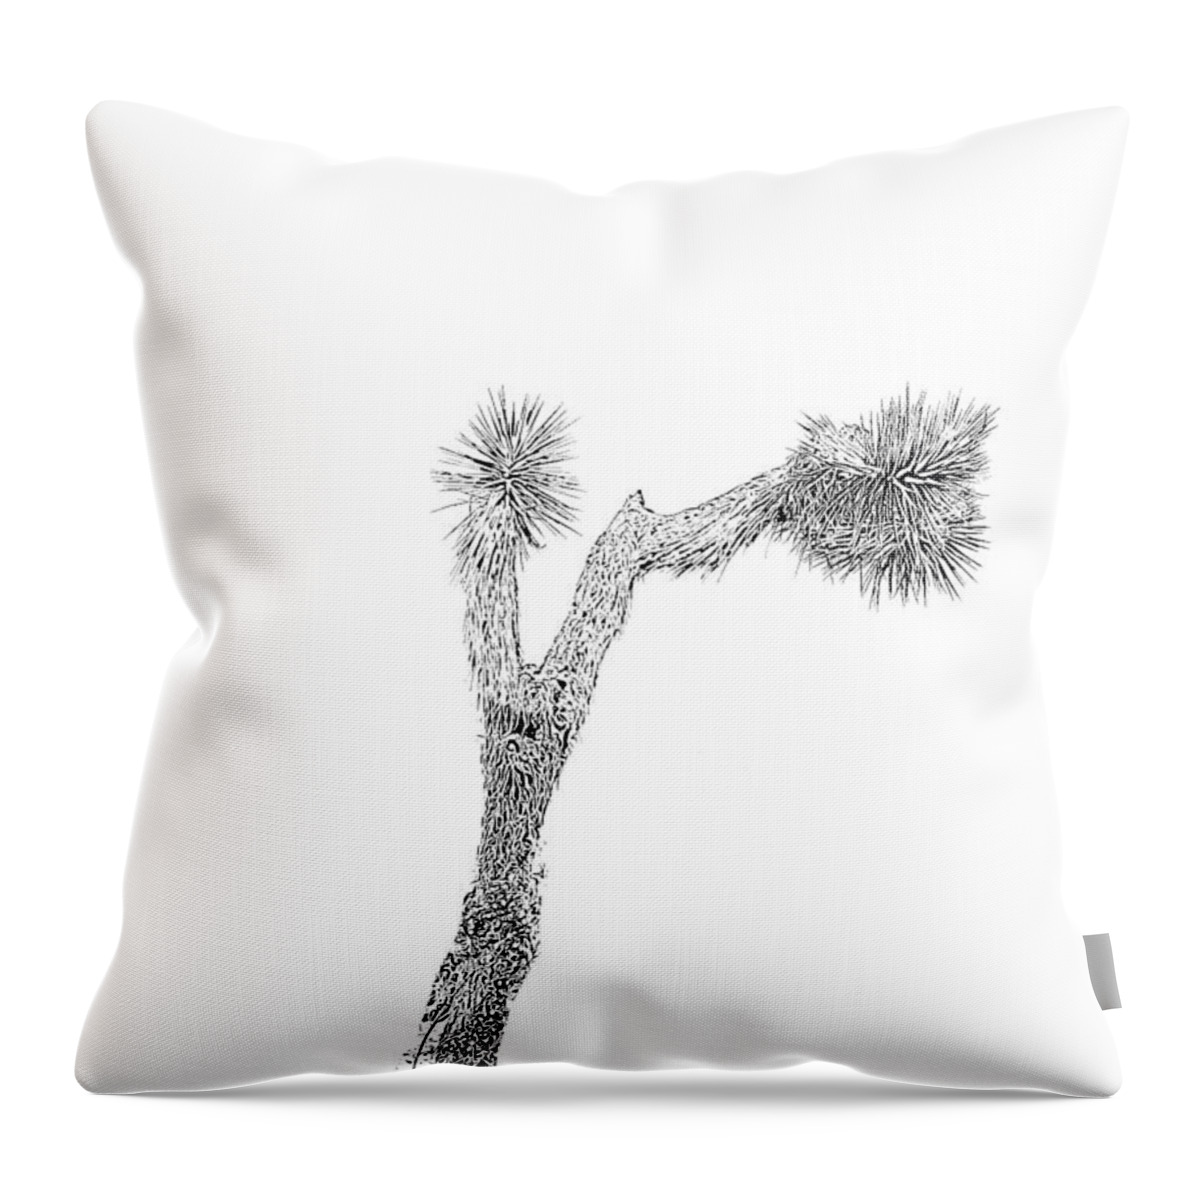 Joshua Tree Throw Pillow featuring the digital art Joshua Tree Black and White by Alison Frank